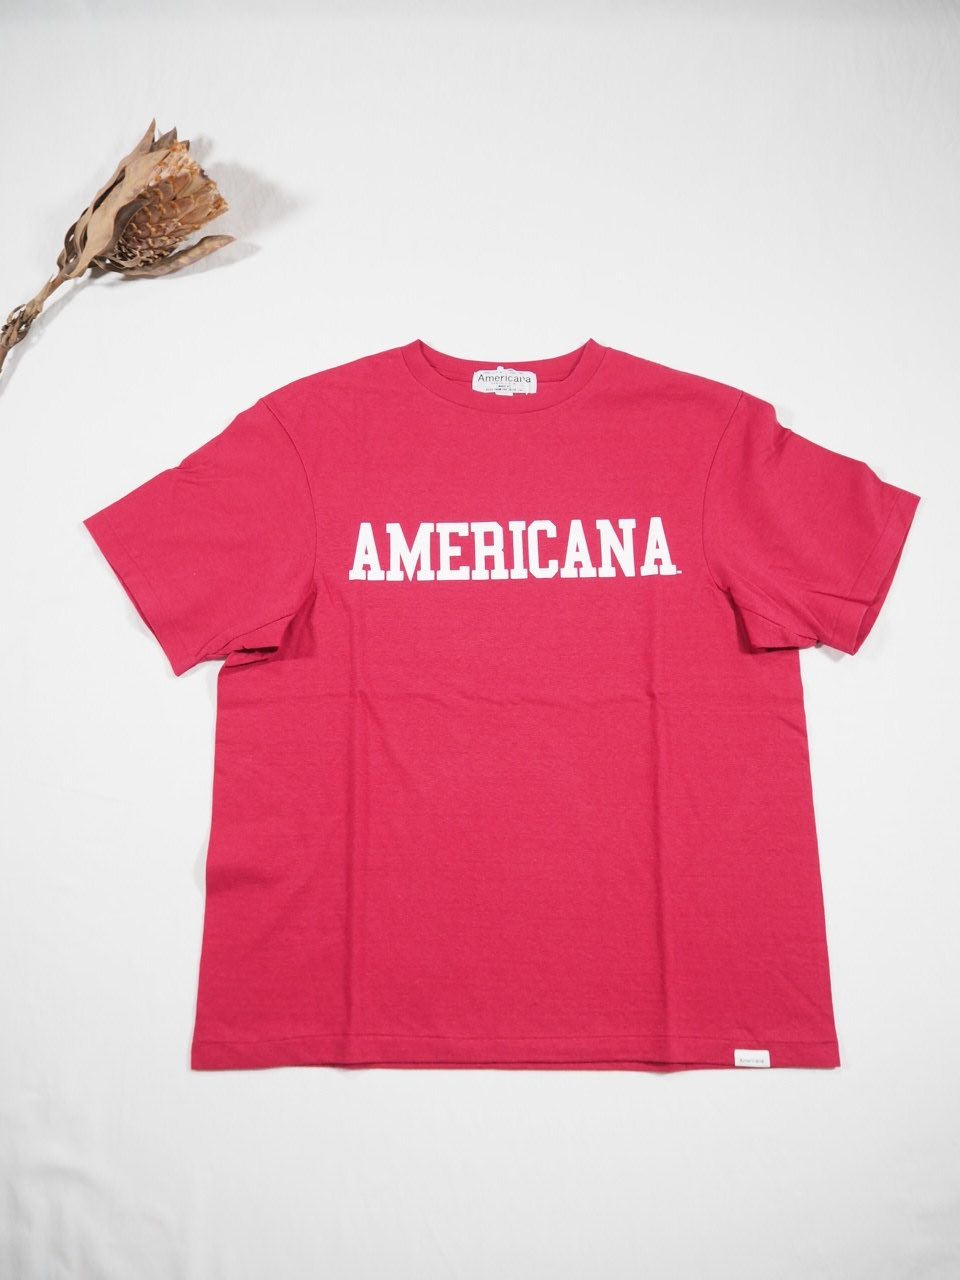 Americanaの定番Tシャツ_e0357389_21023148.jpg